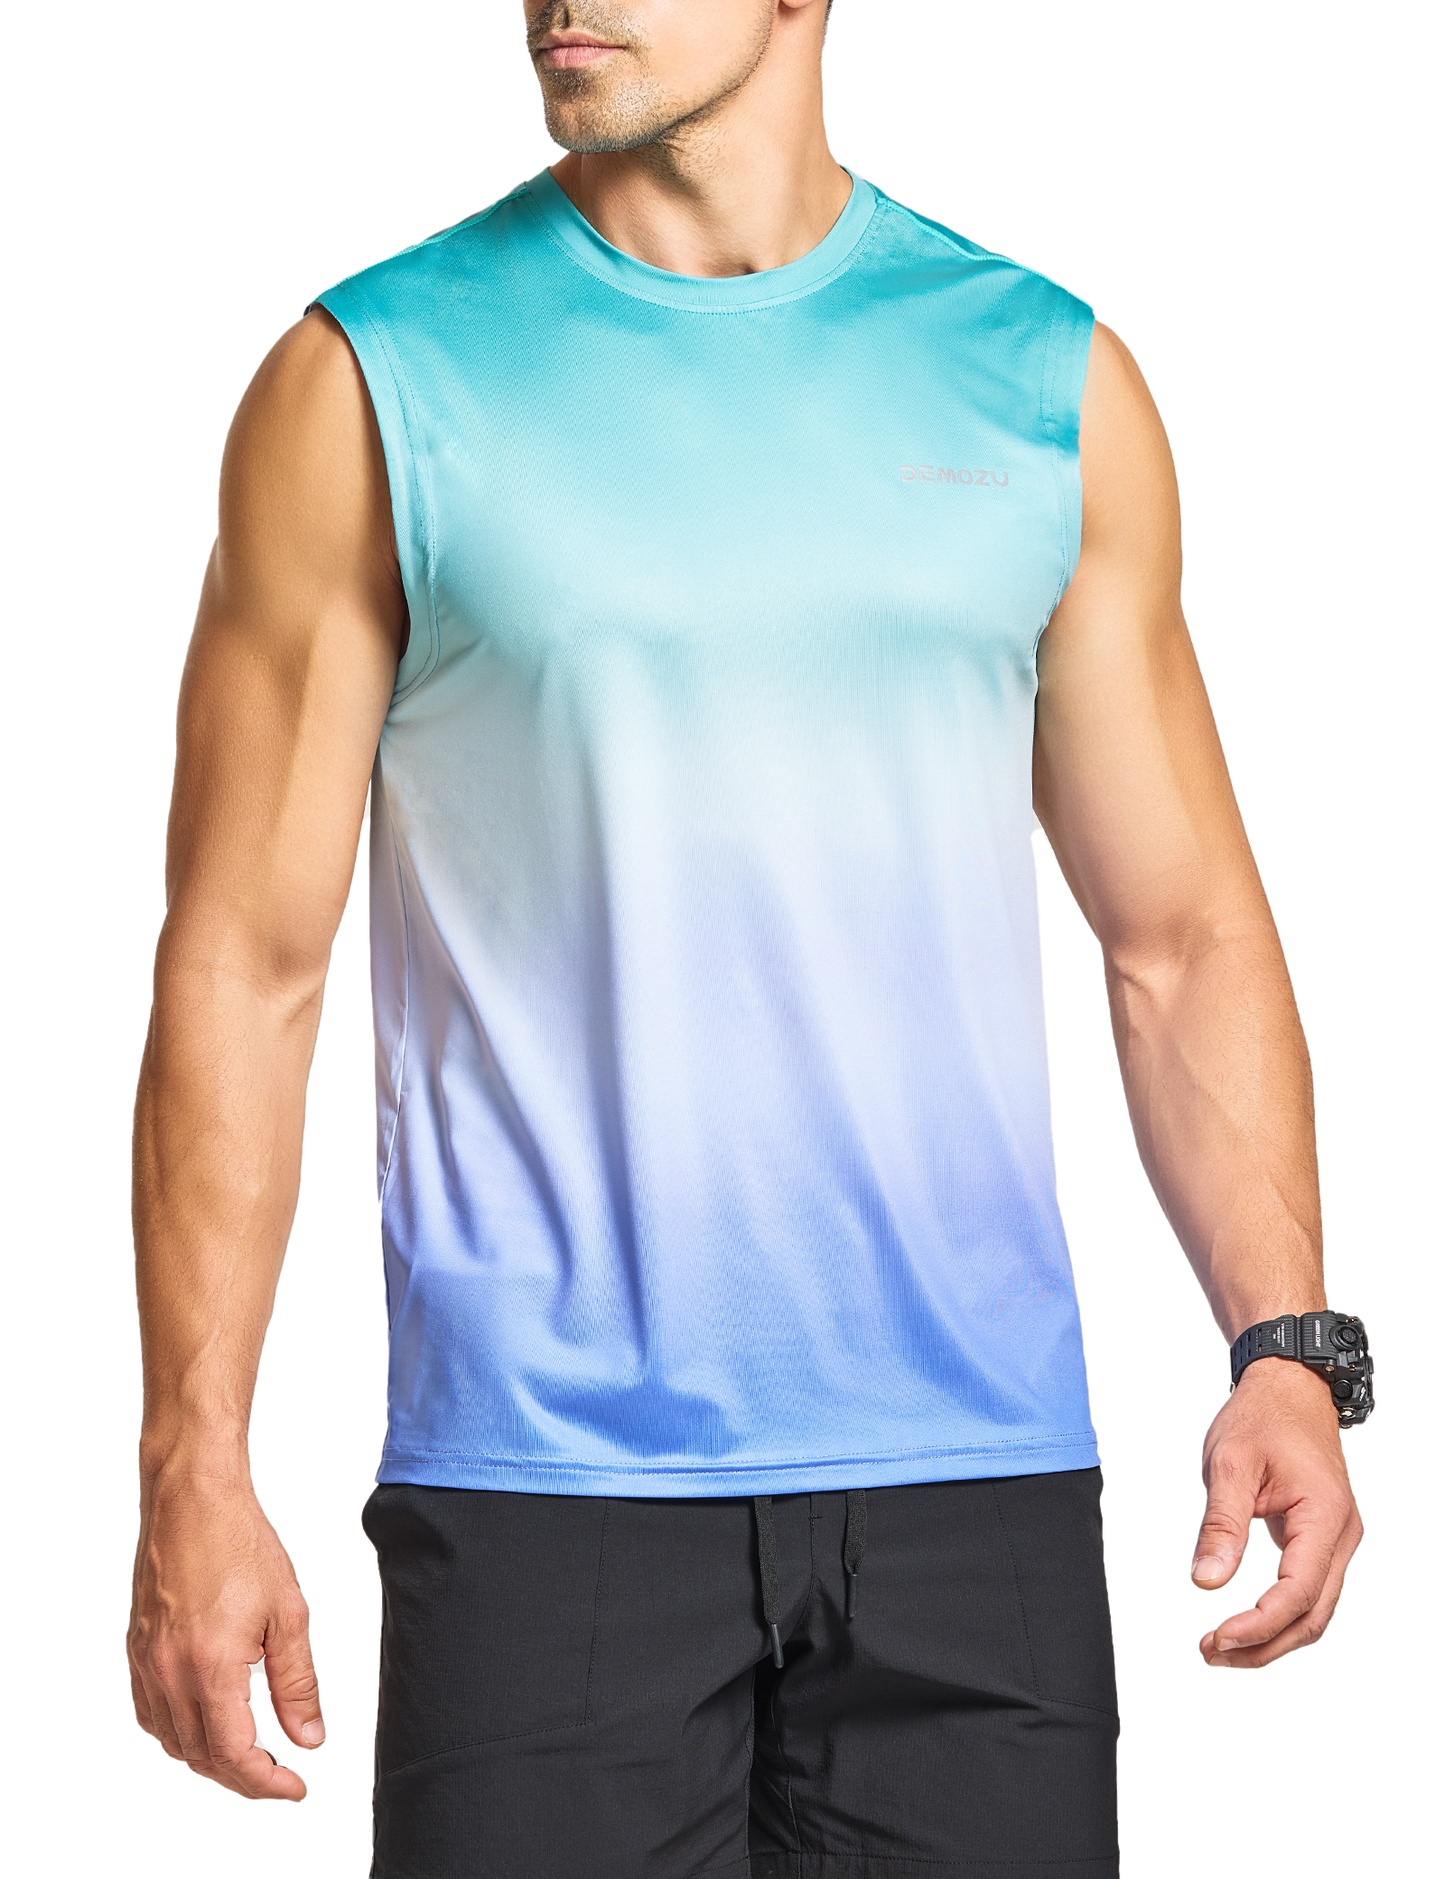 mens sleeveless workout swim shirts pride mlm